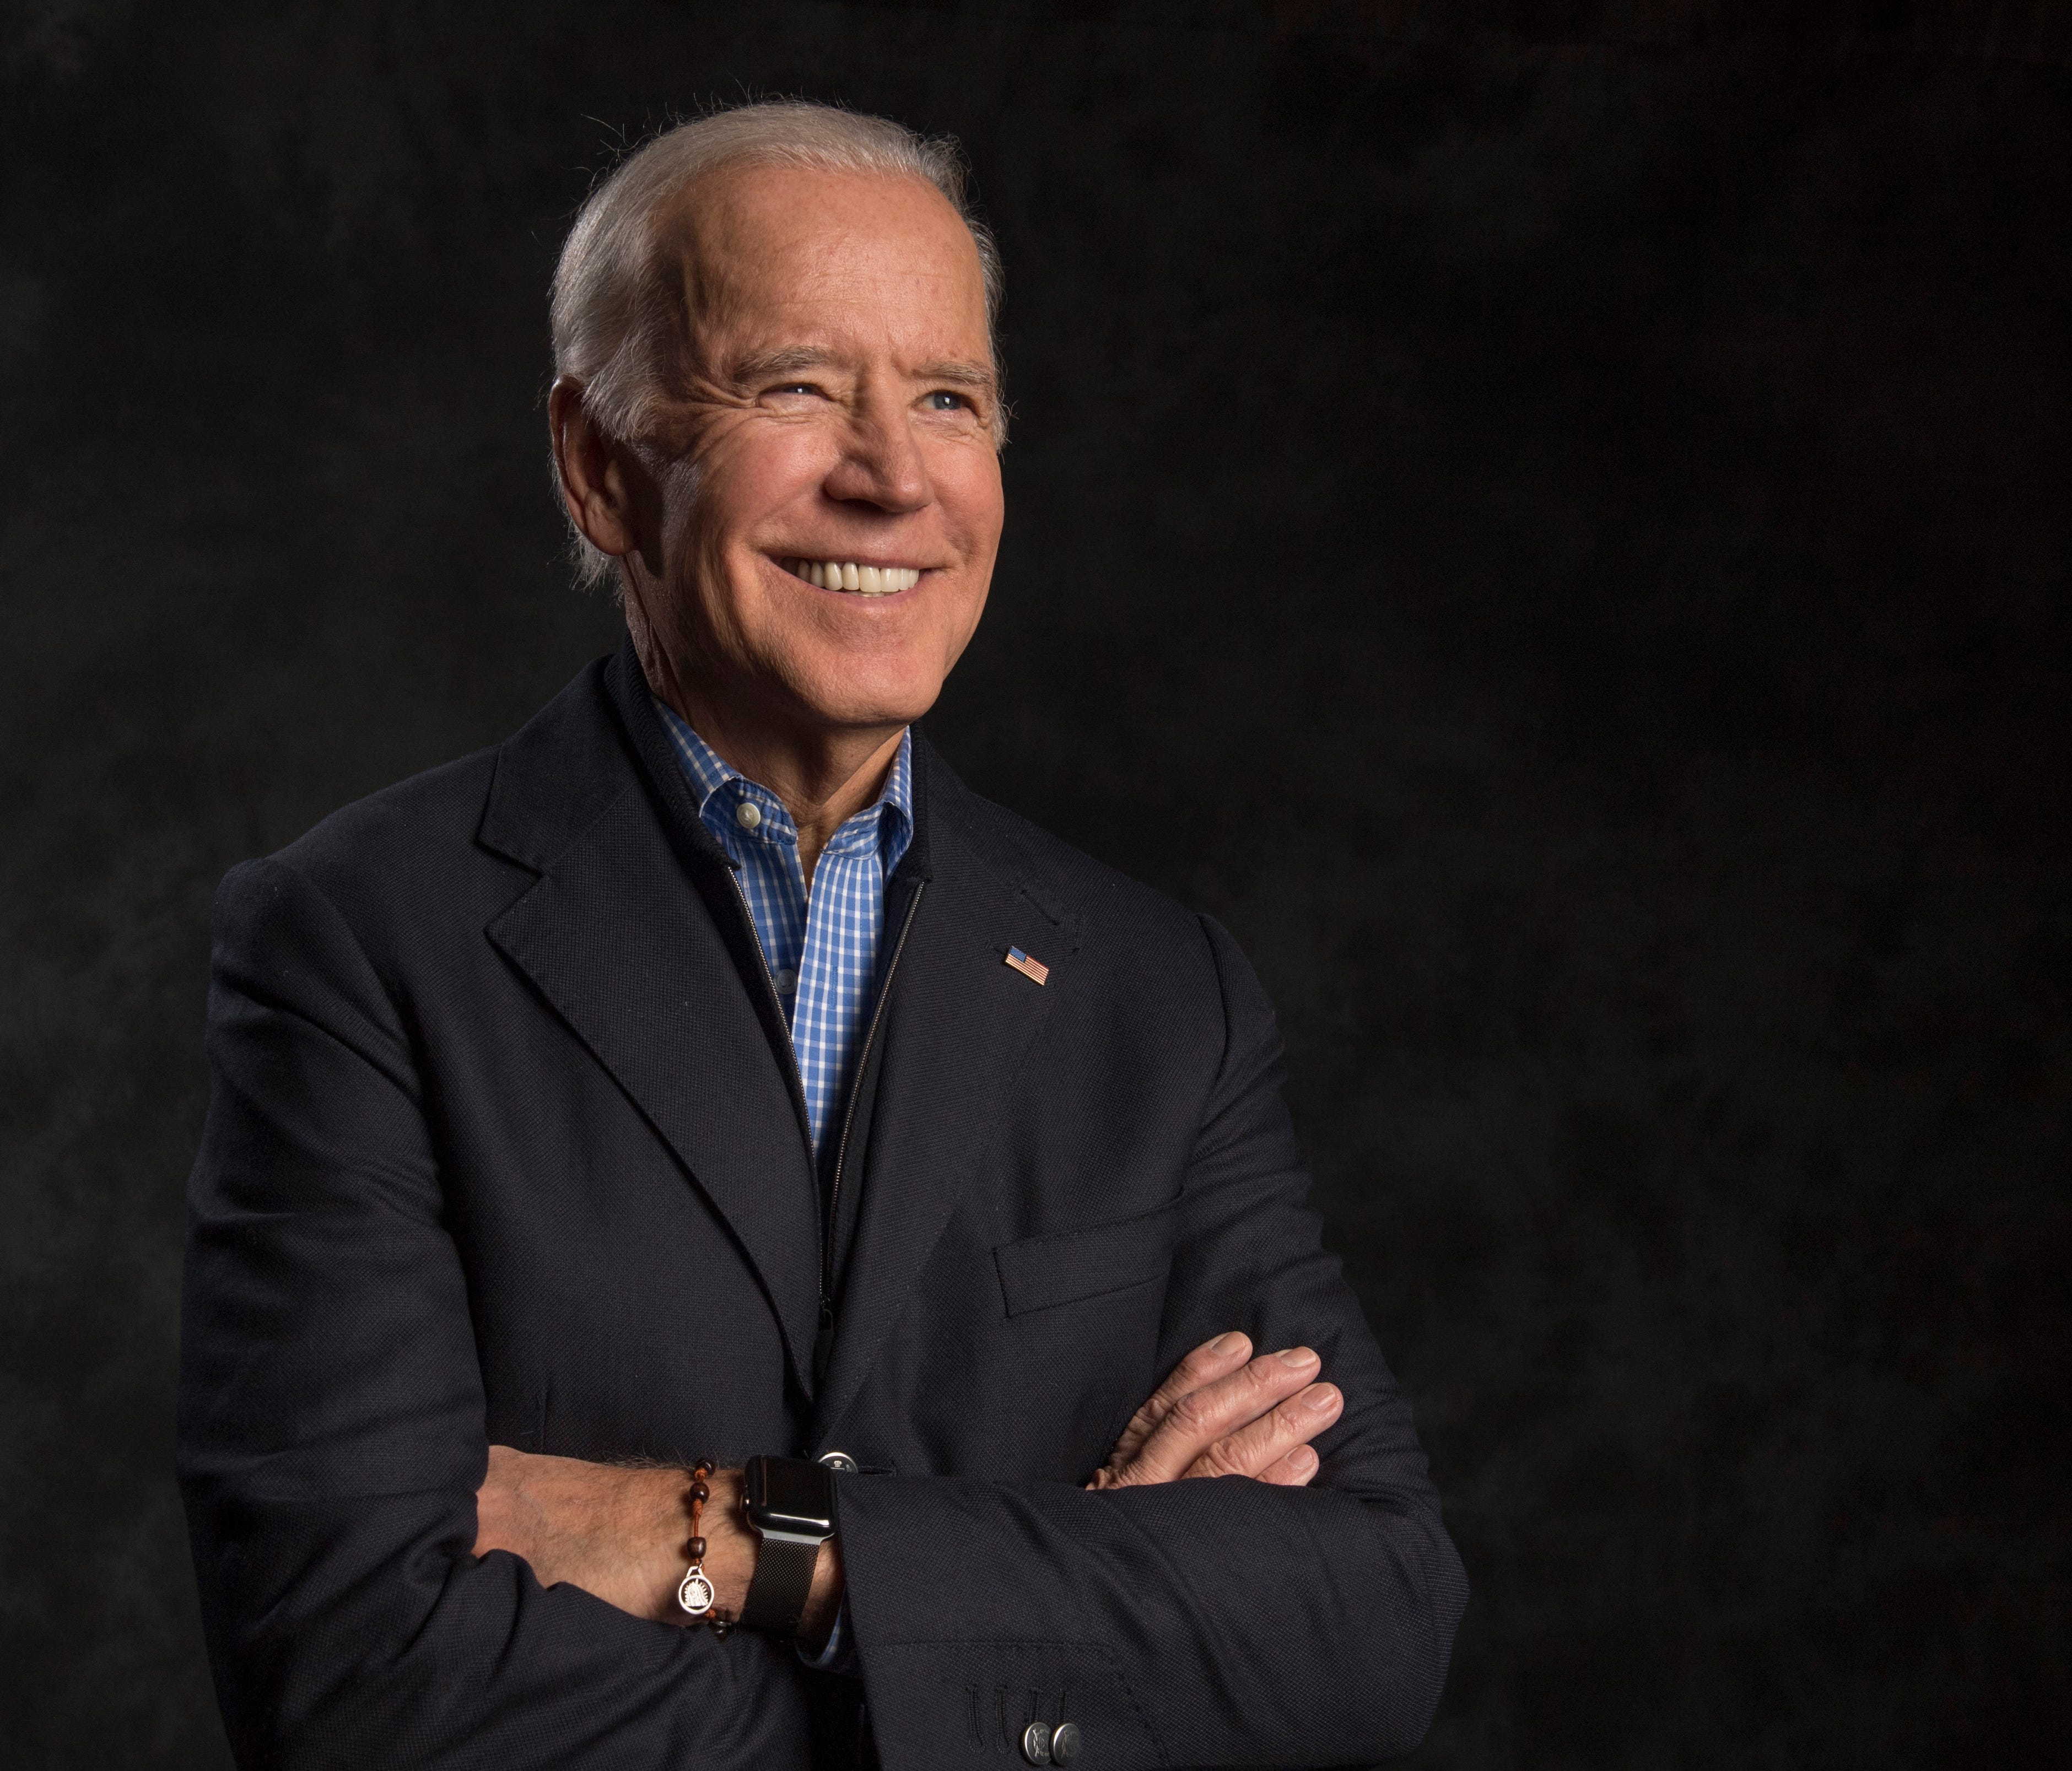 Biden poses for a portrait on Nov. 12, 2017, in New York.